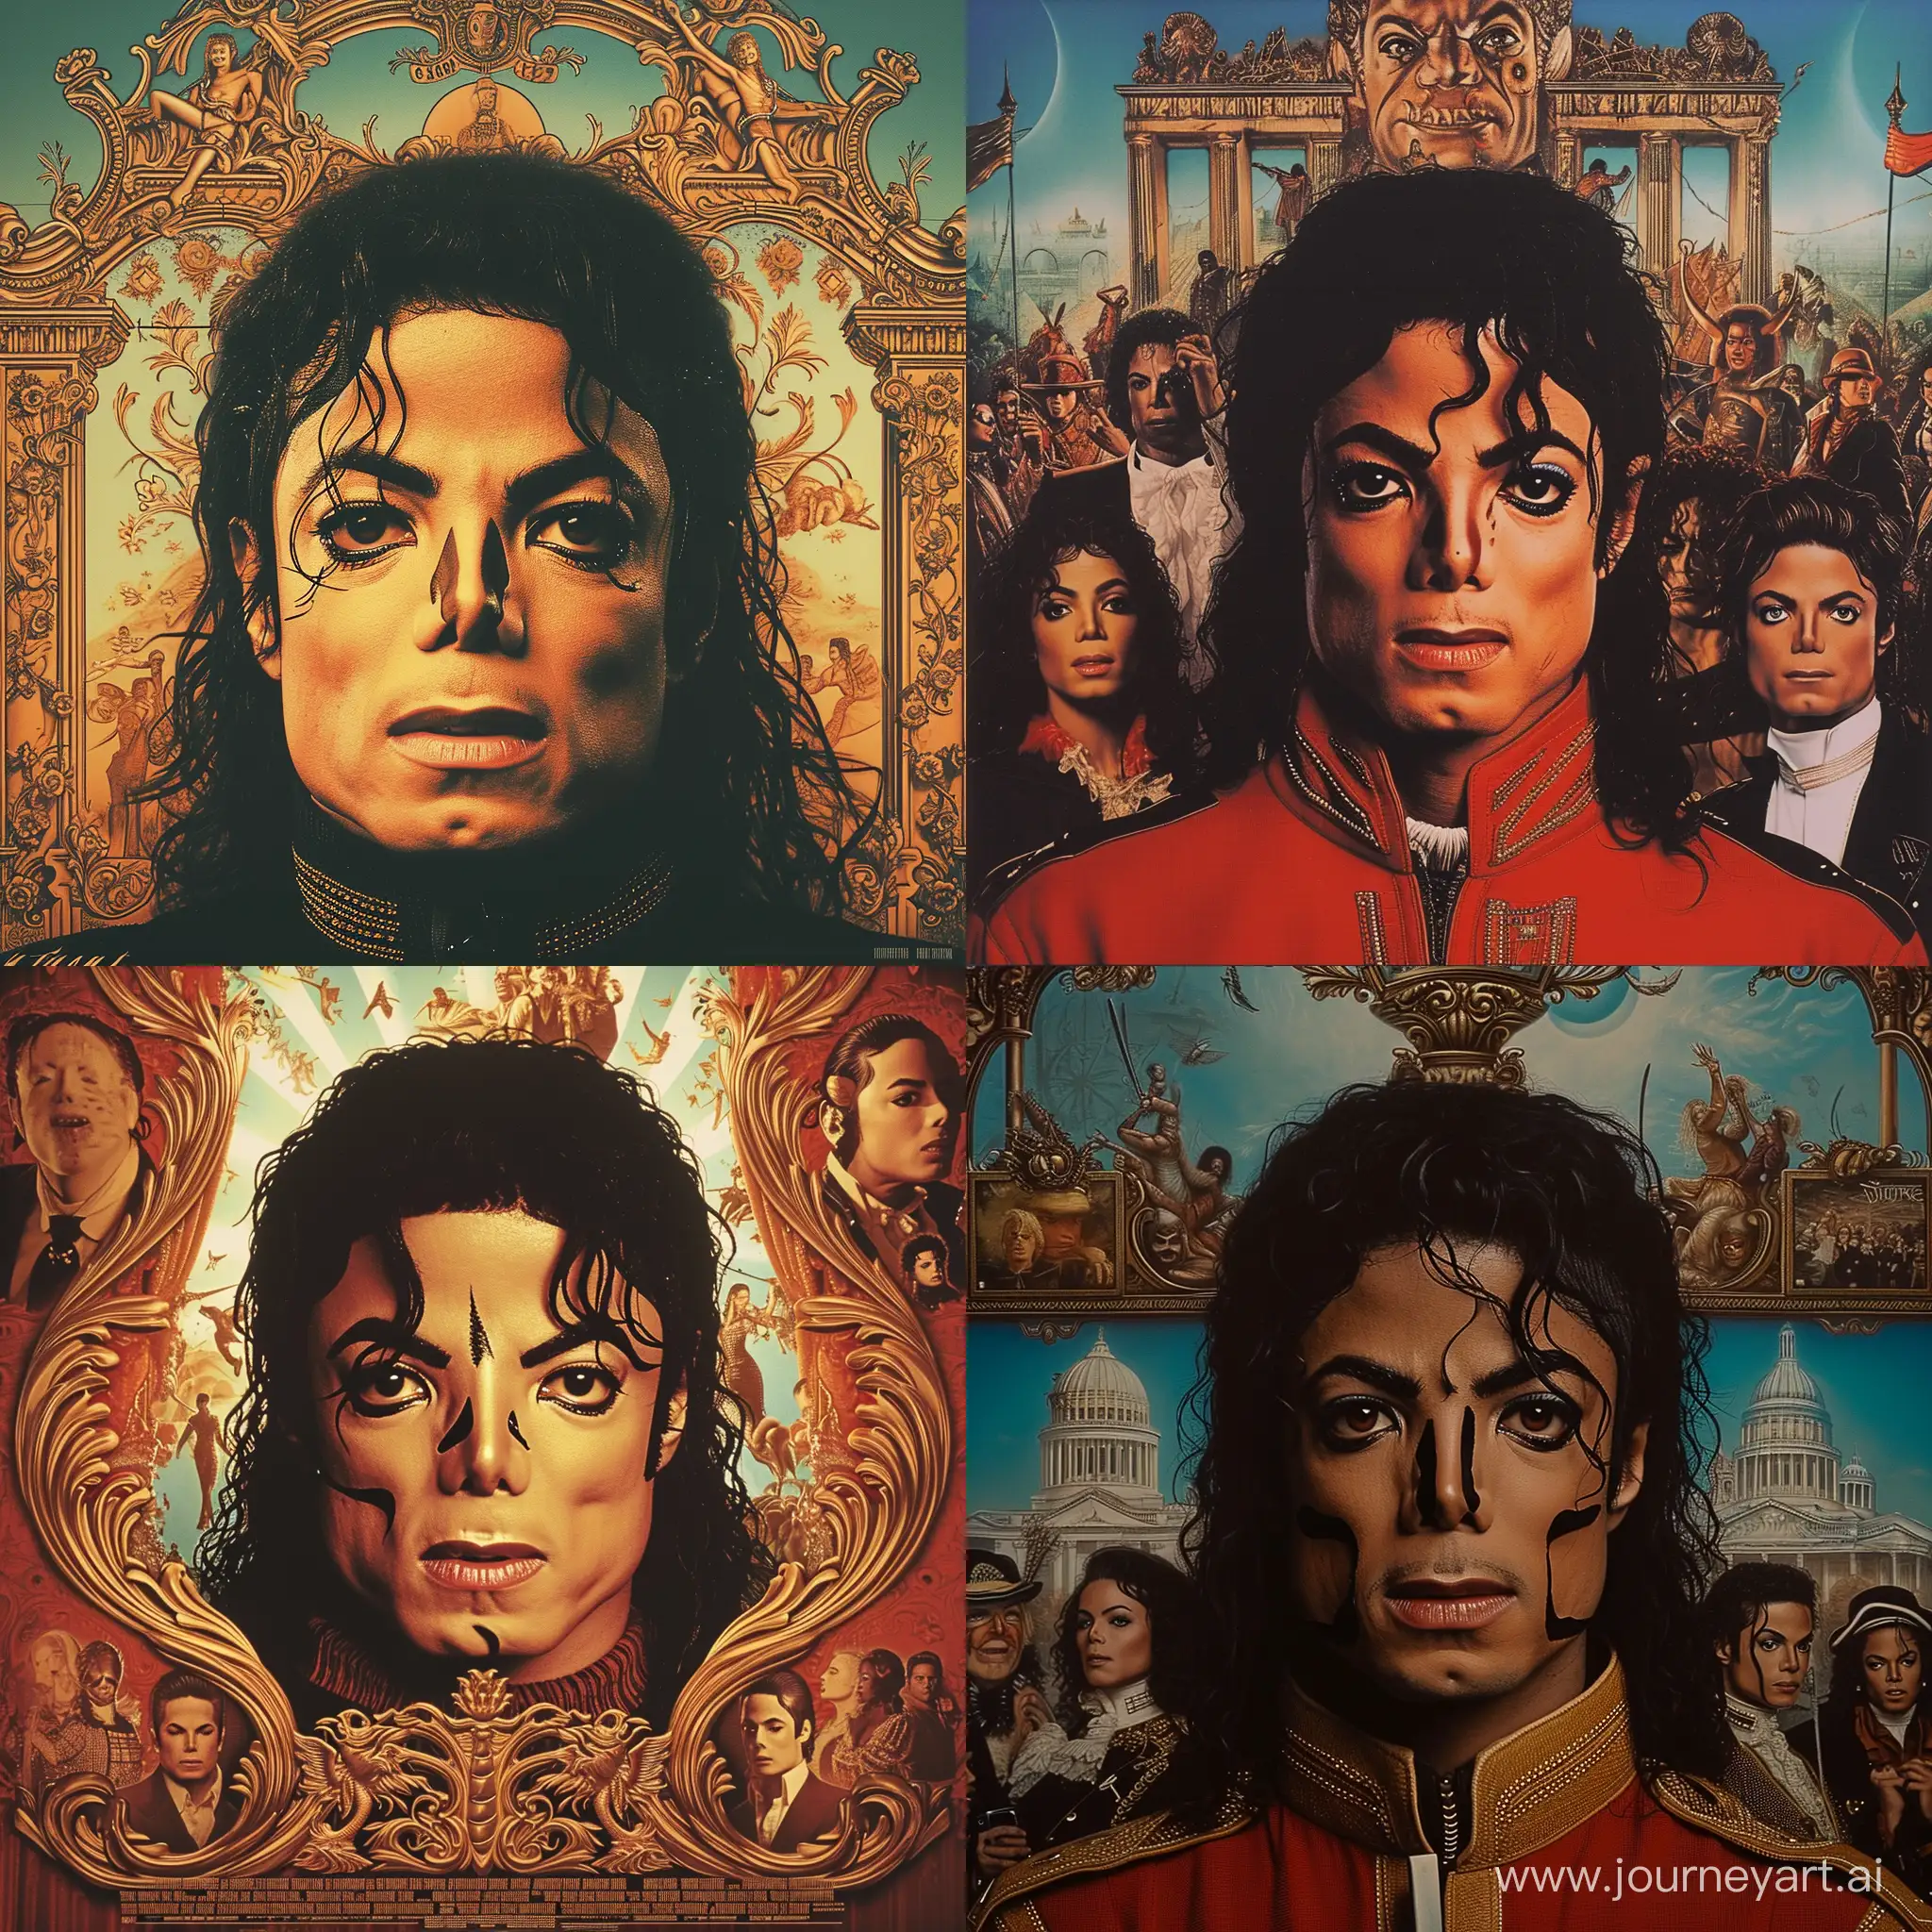 Michael Jackson movie poster